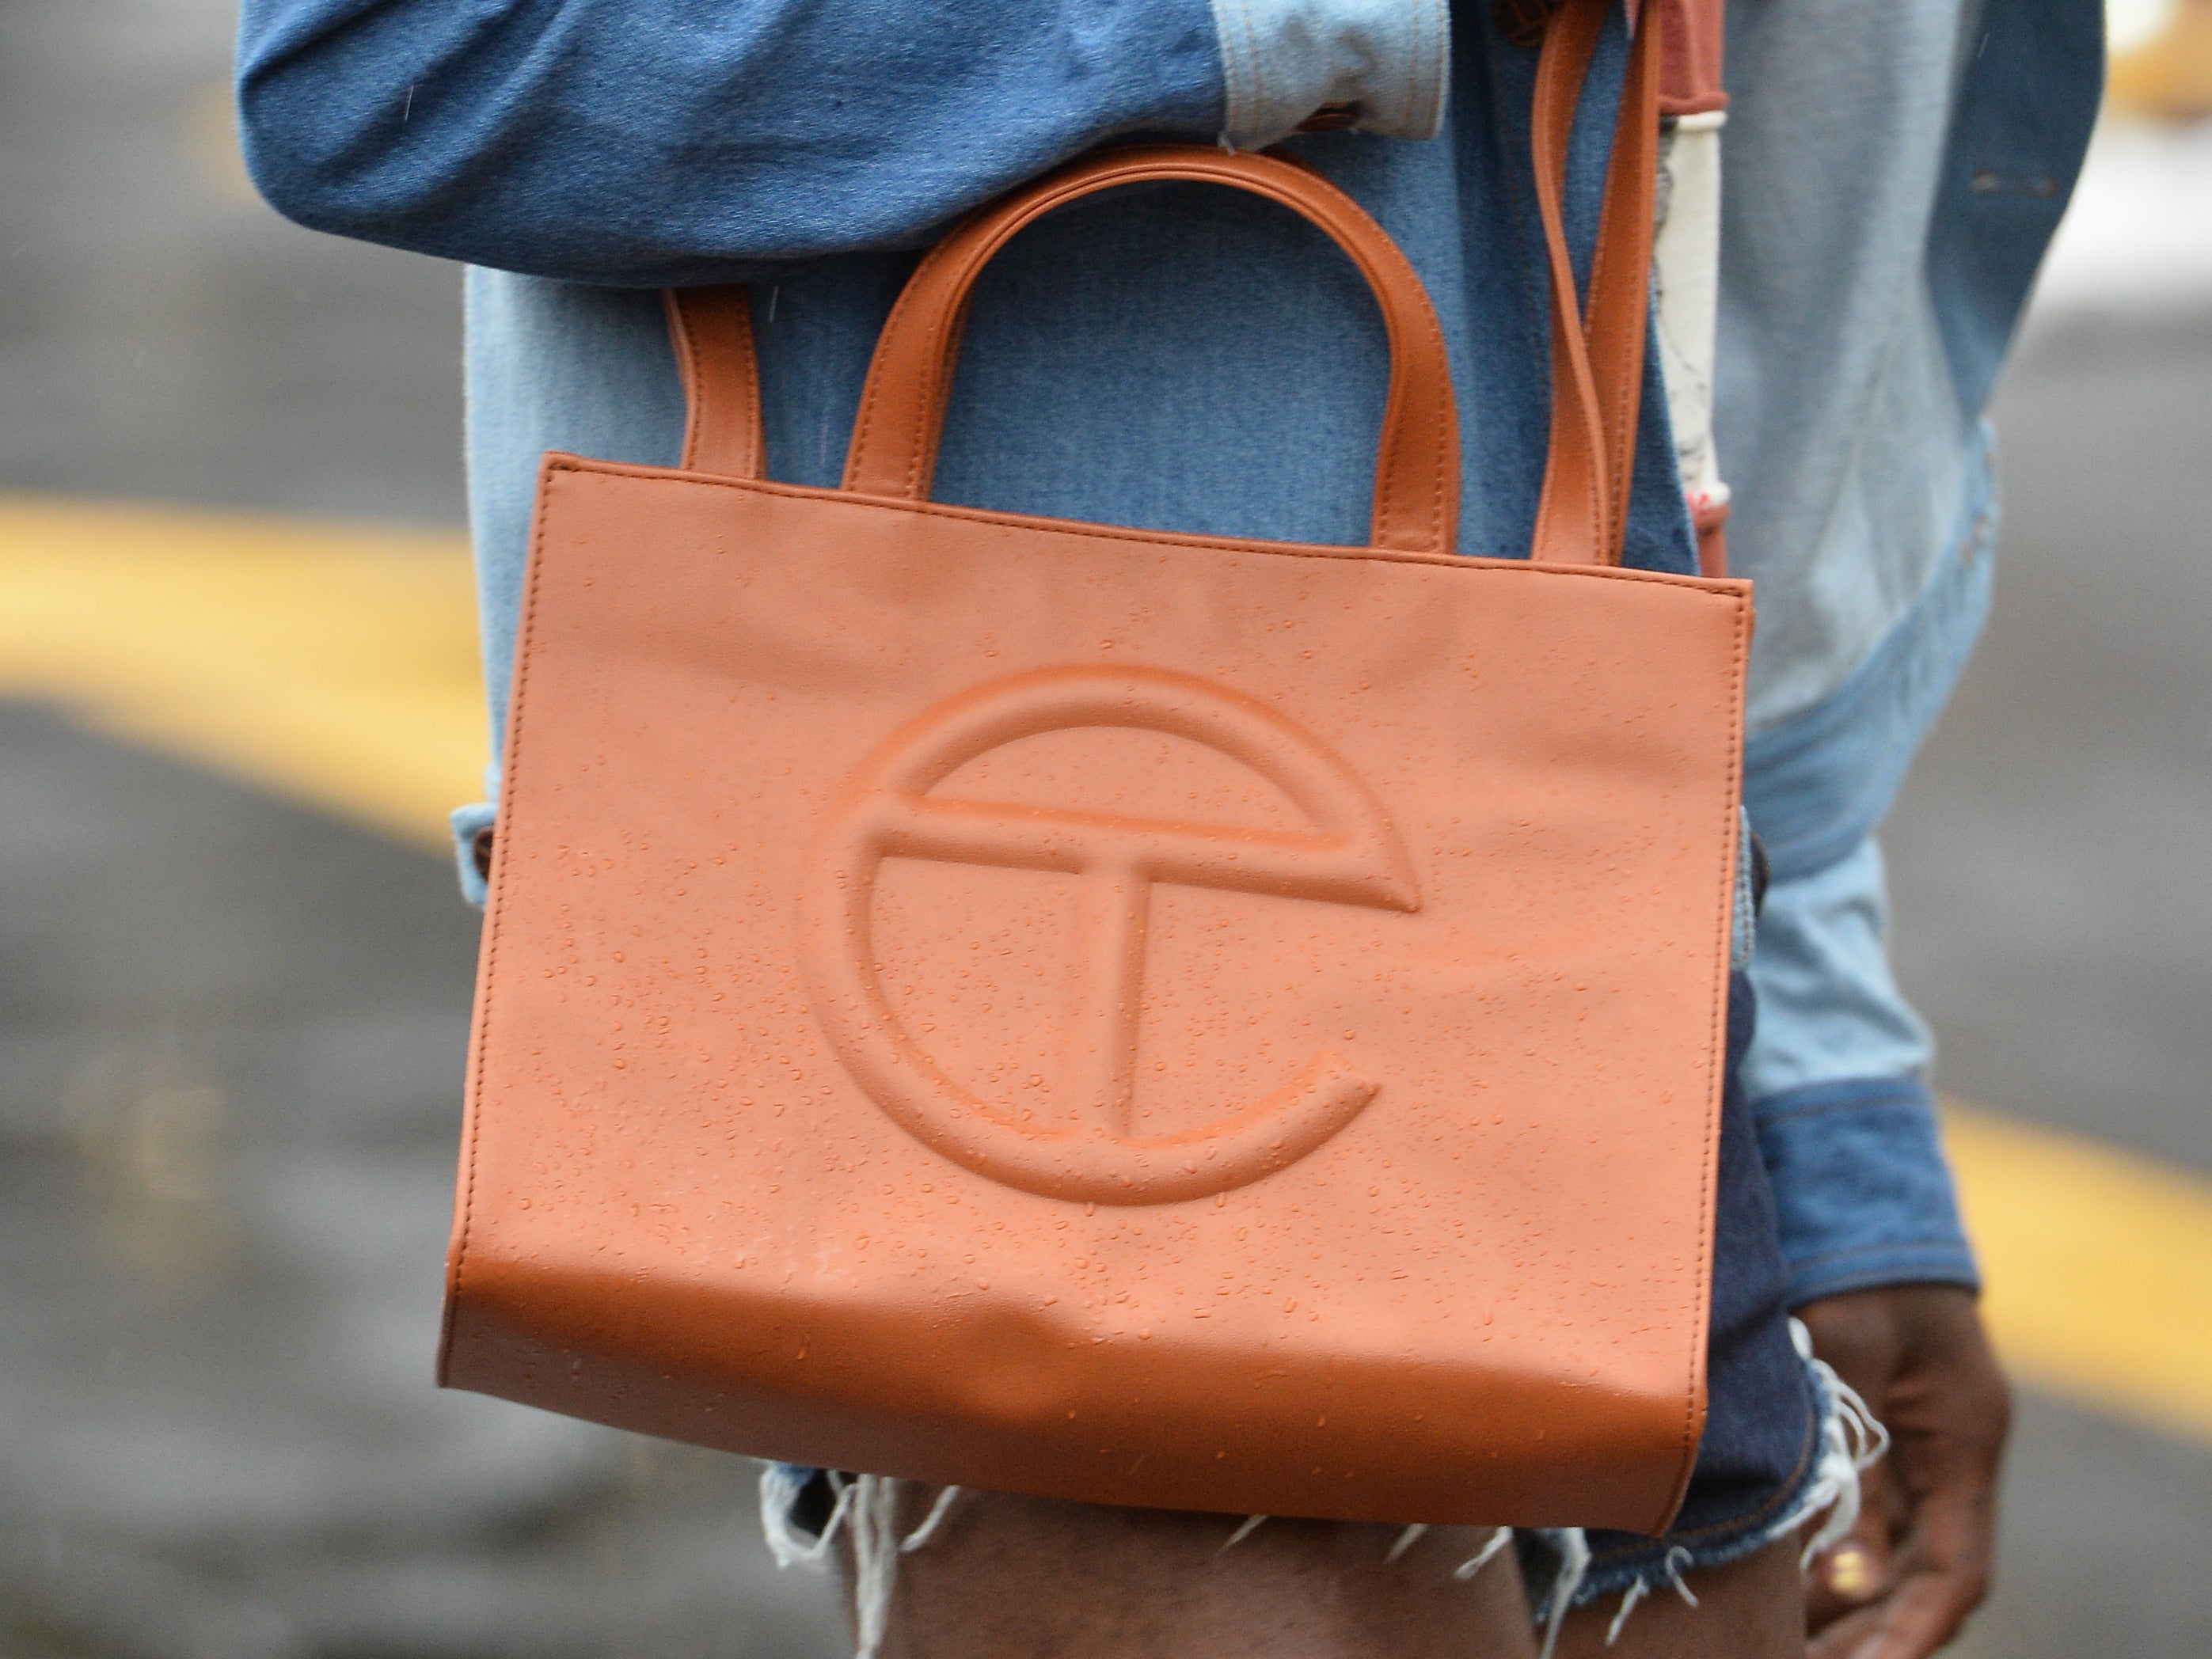 Telfar just won a major fashion award for its bags